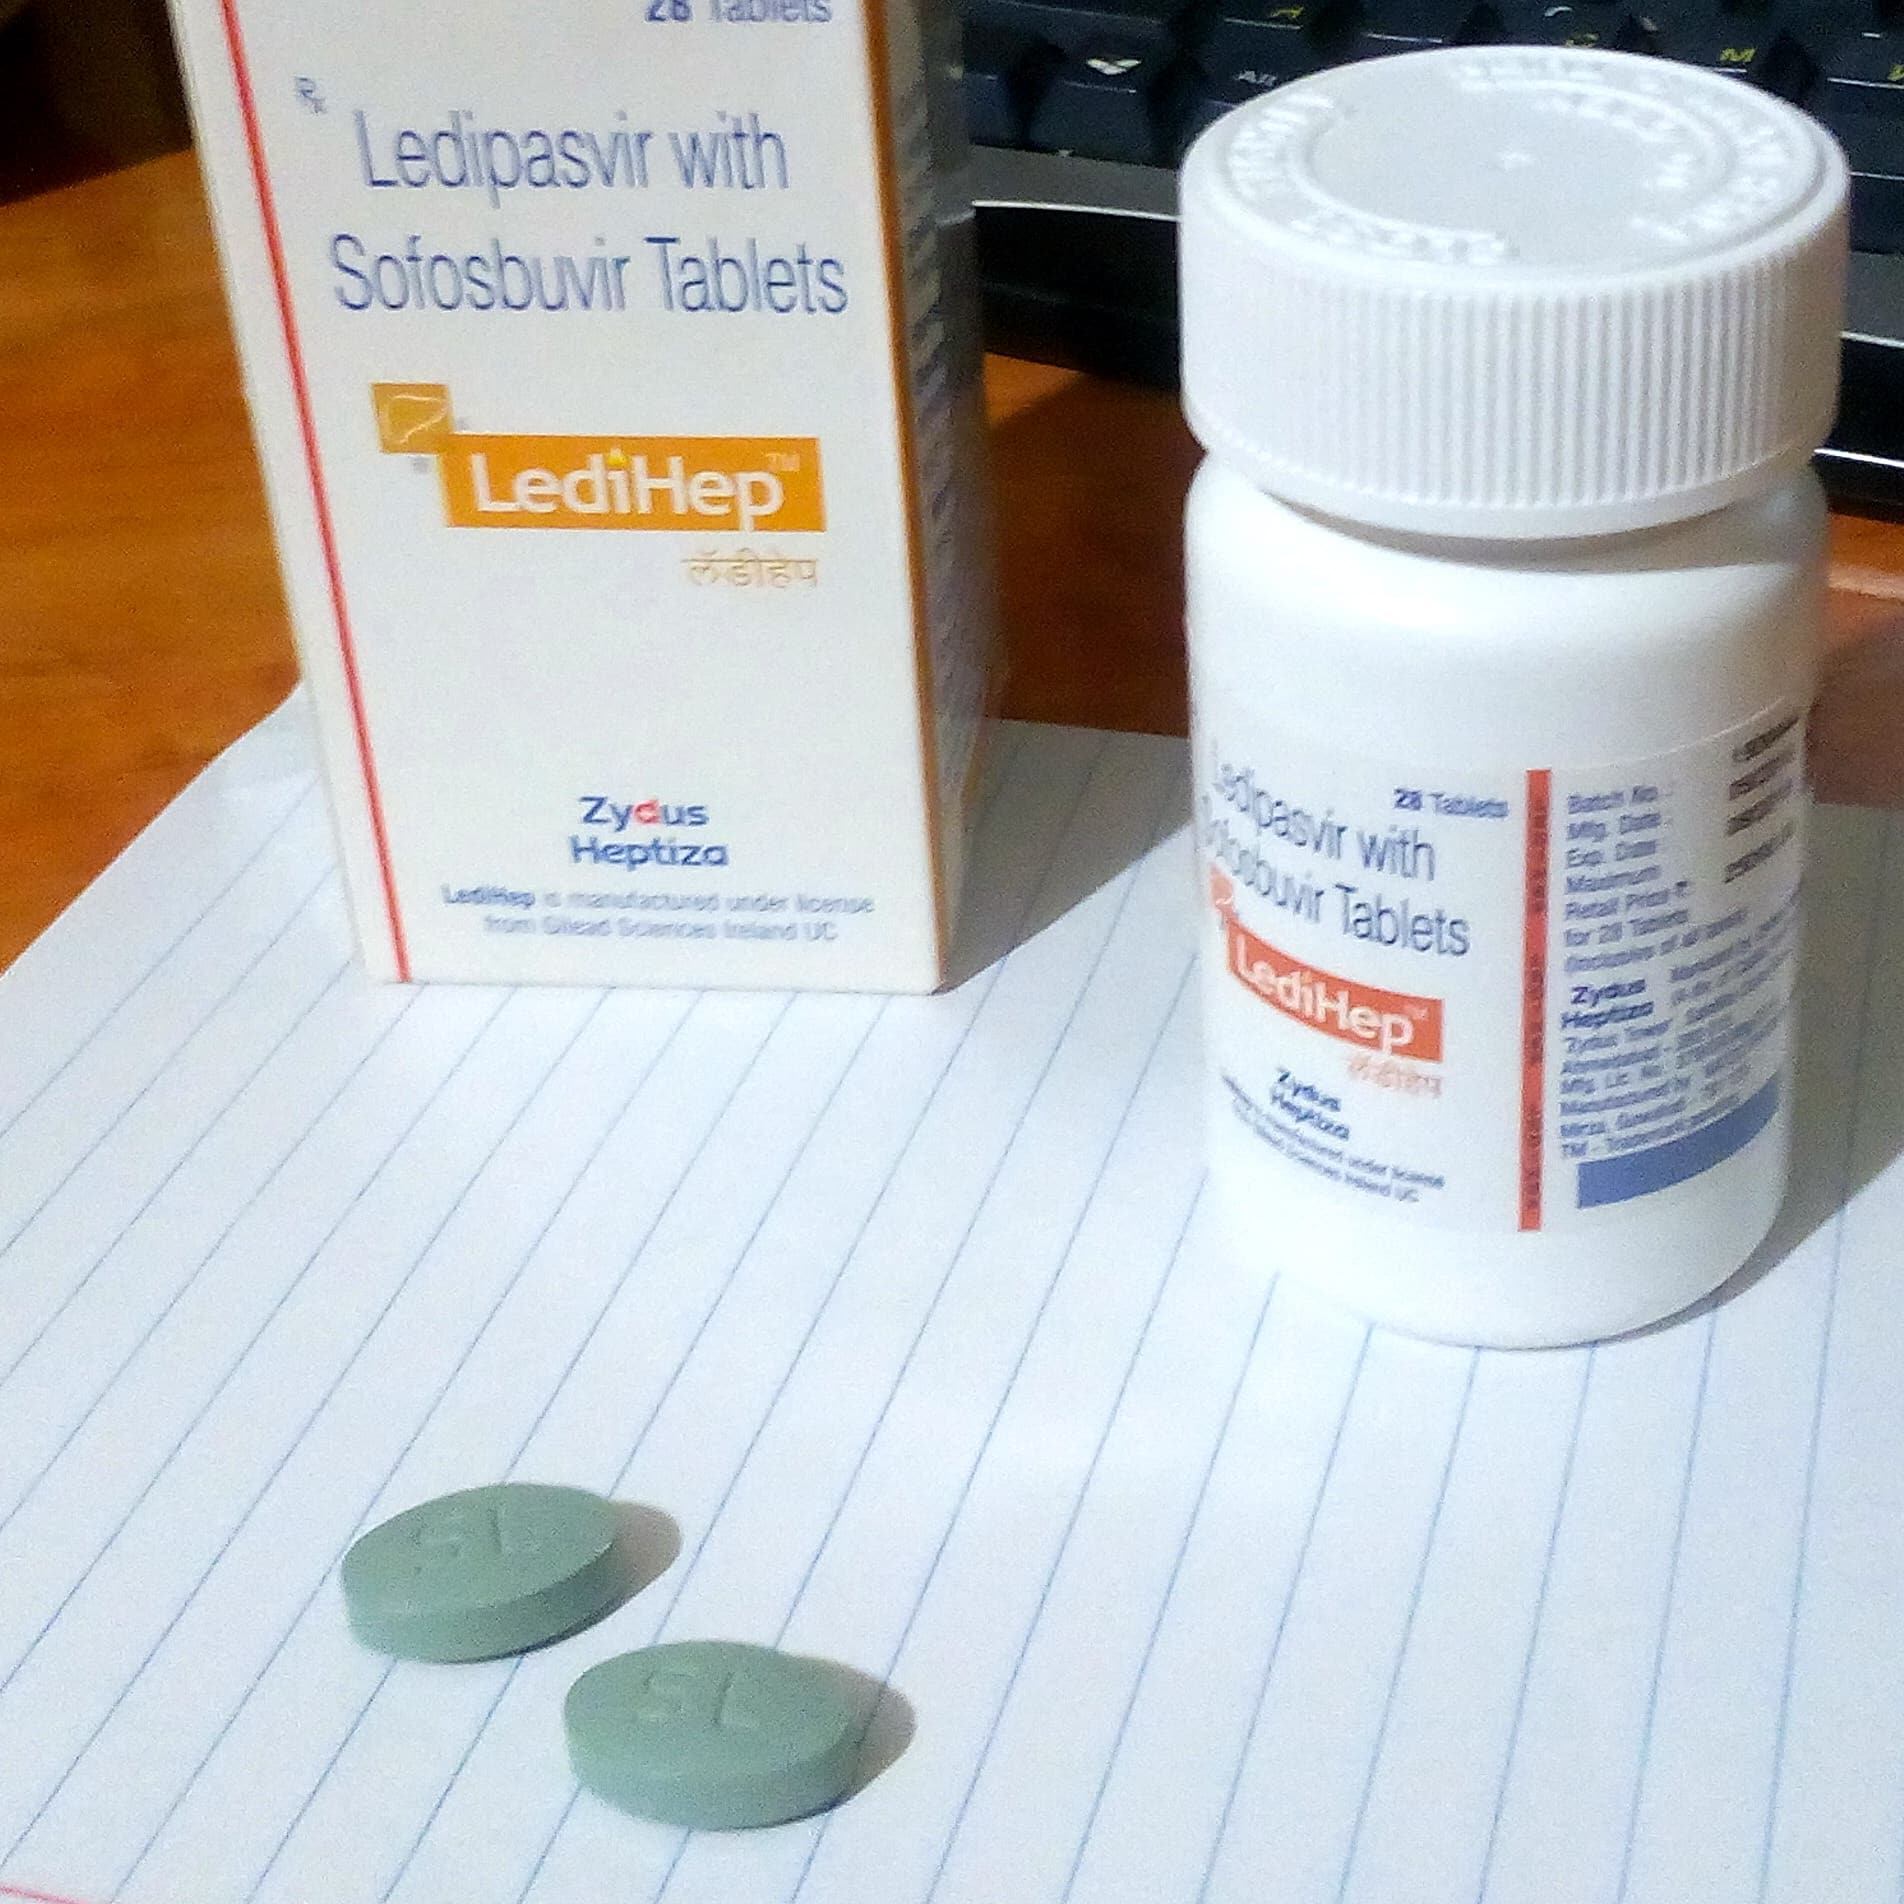 Ledihep (Ледихэп) - софосбувир + ледипасвир, 3 шт. на курс терапии